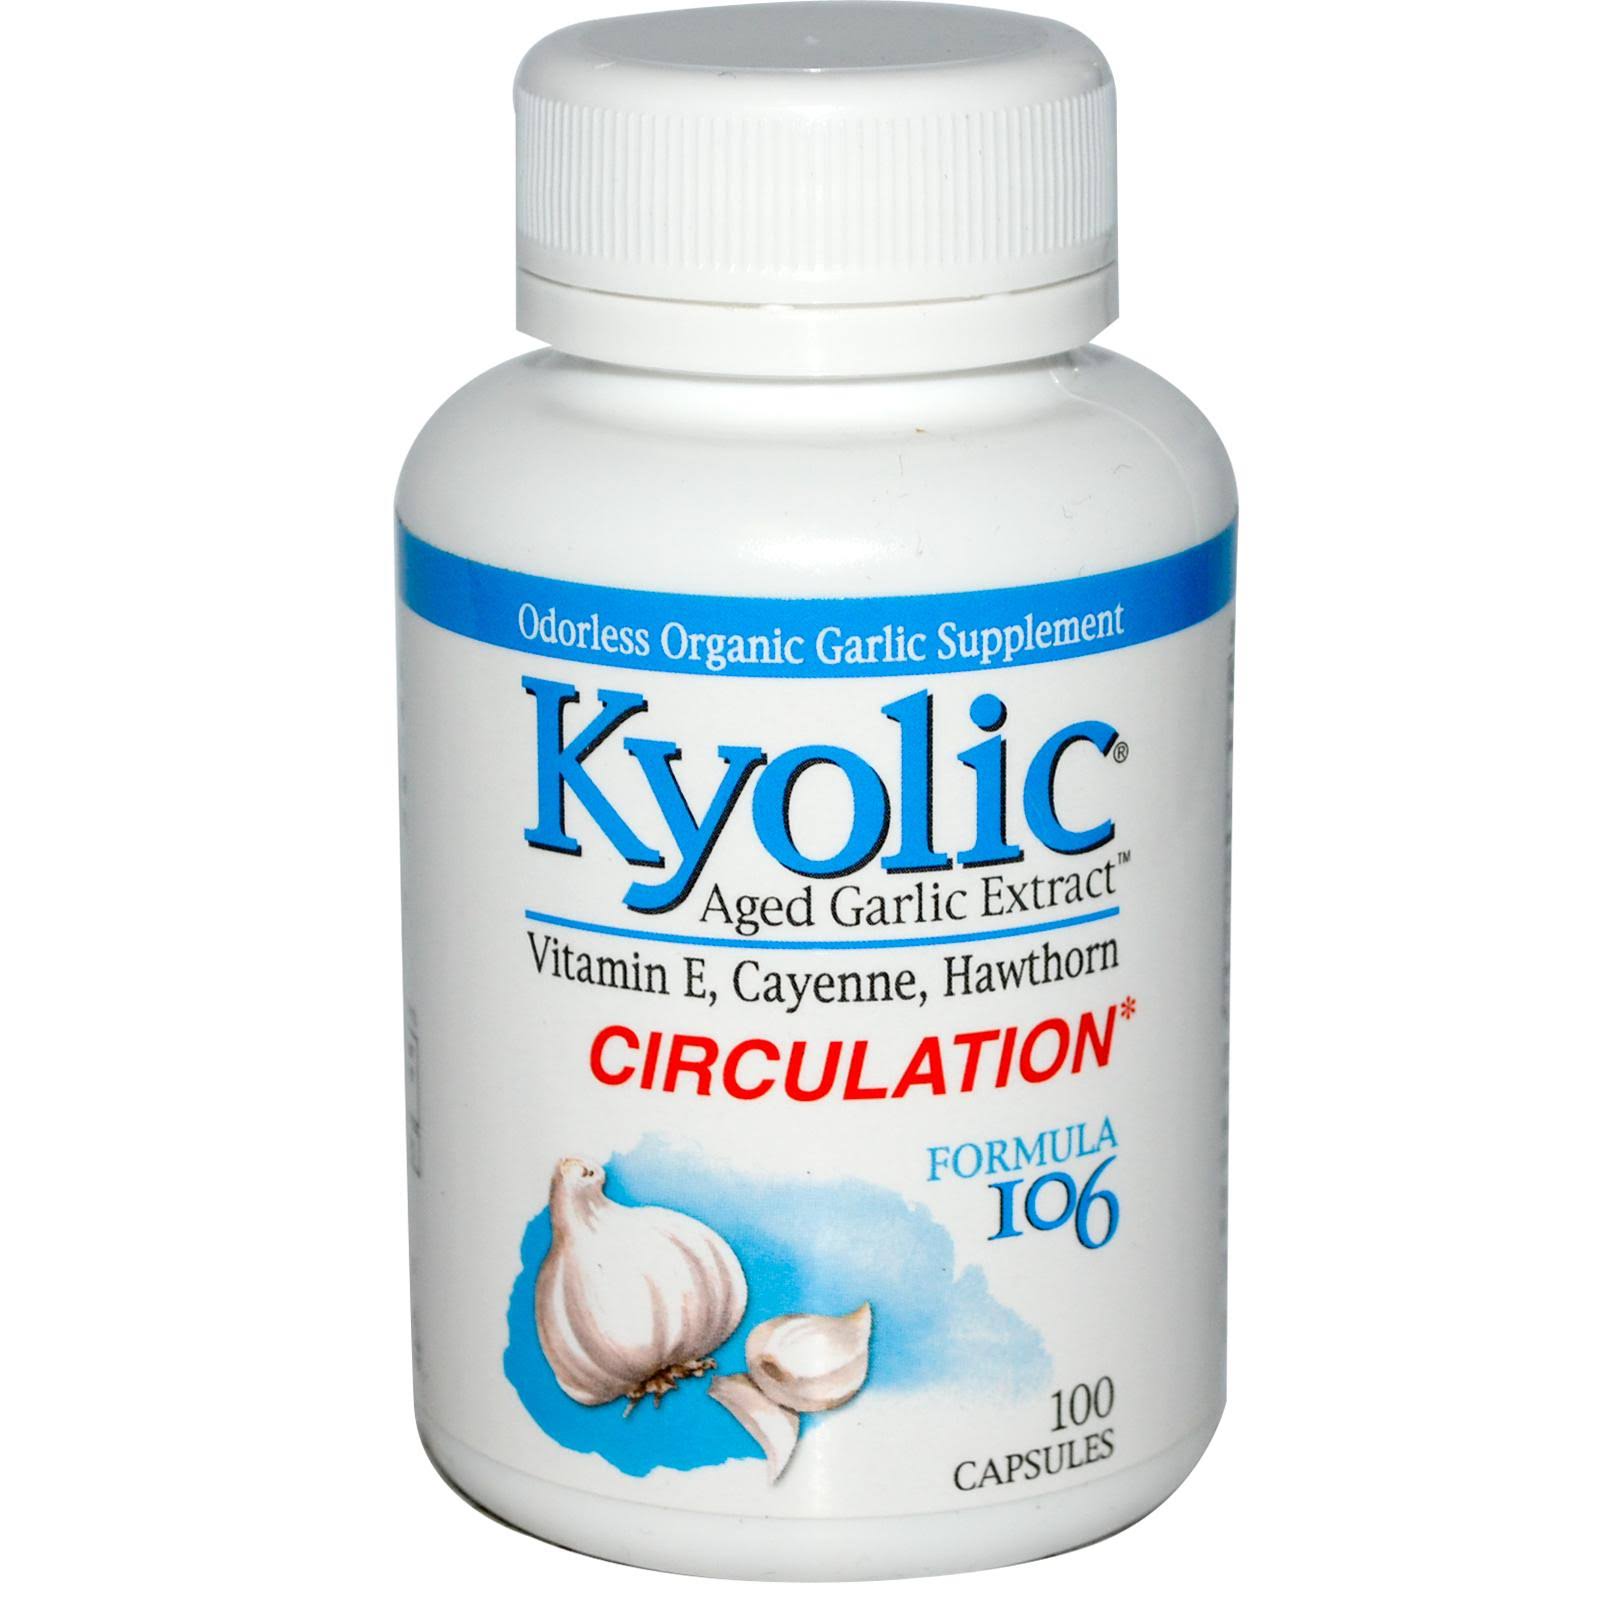 Kyolic Garlic Formula 106 Healthy Heart - 300 Capsules